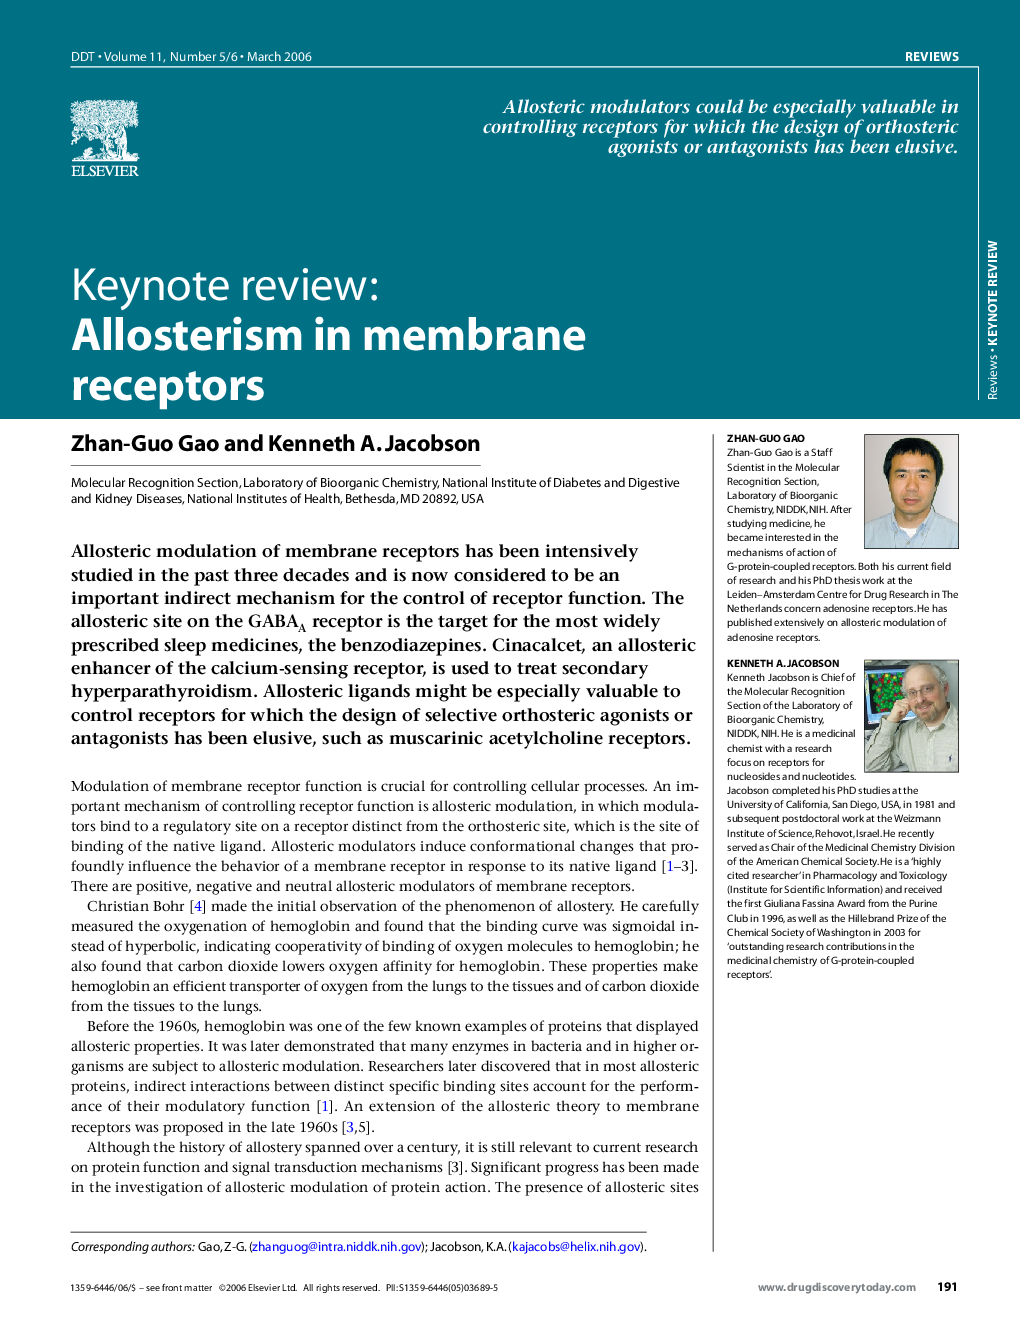 Keynote review: Allosterism in membrane receptors